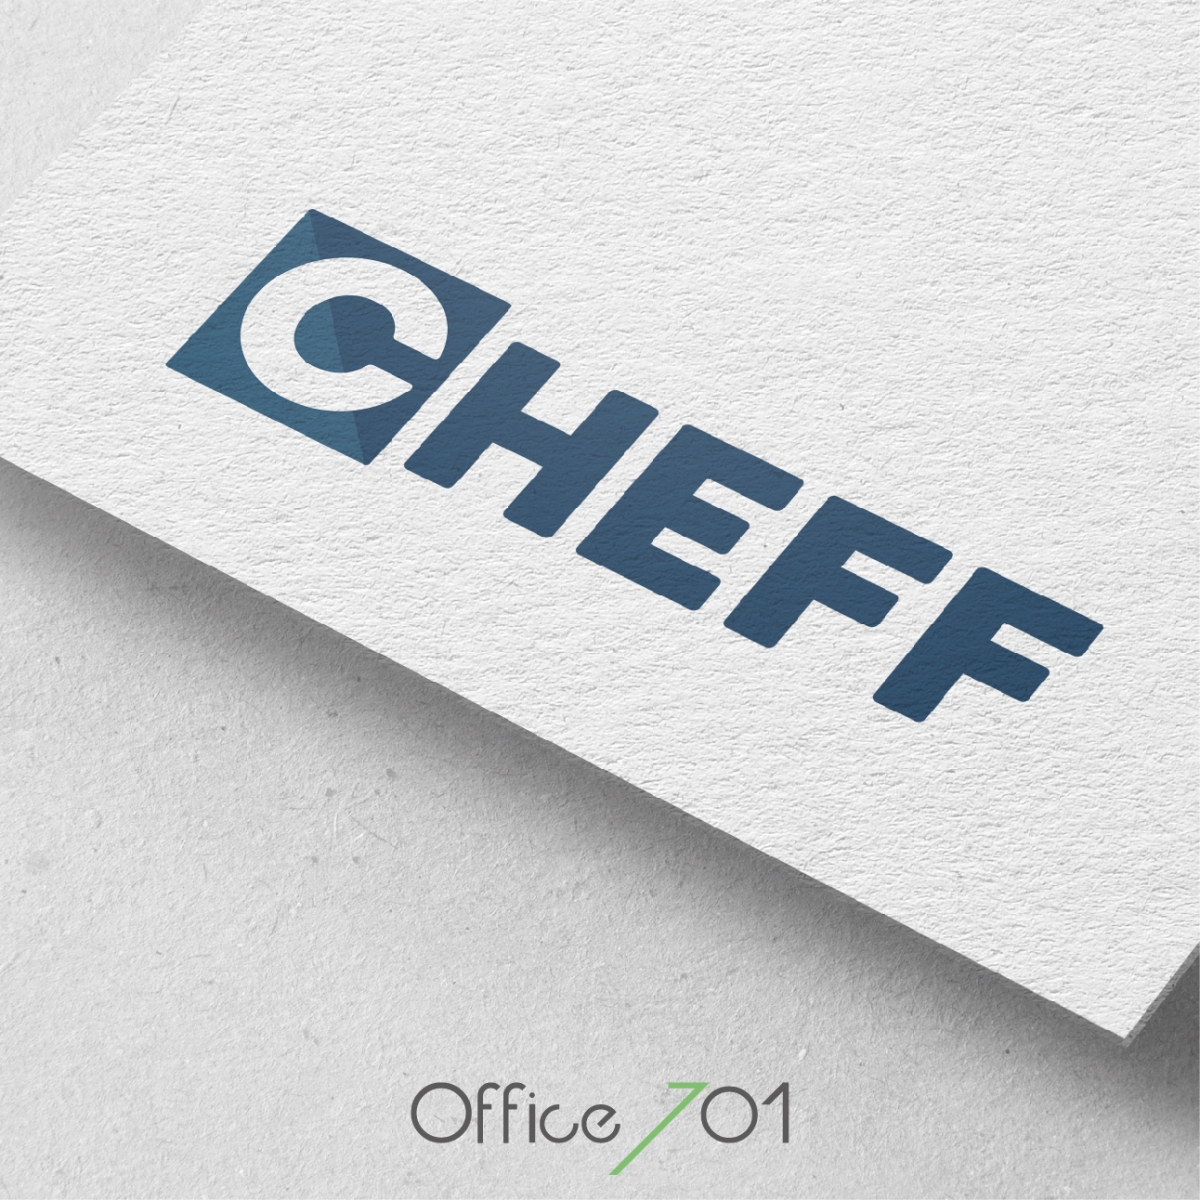 Office701 | Cheff Logo Design